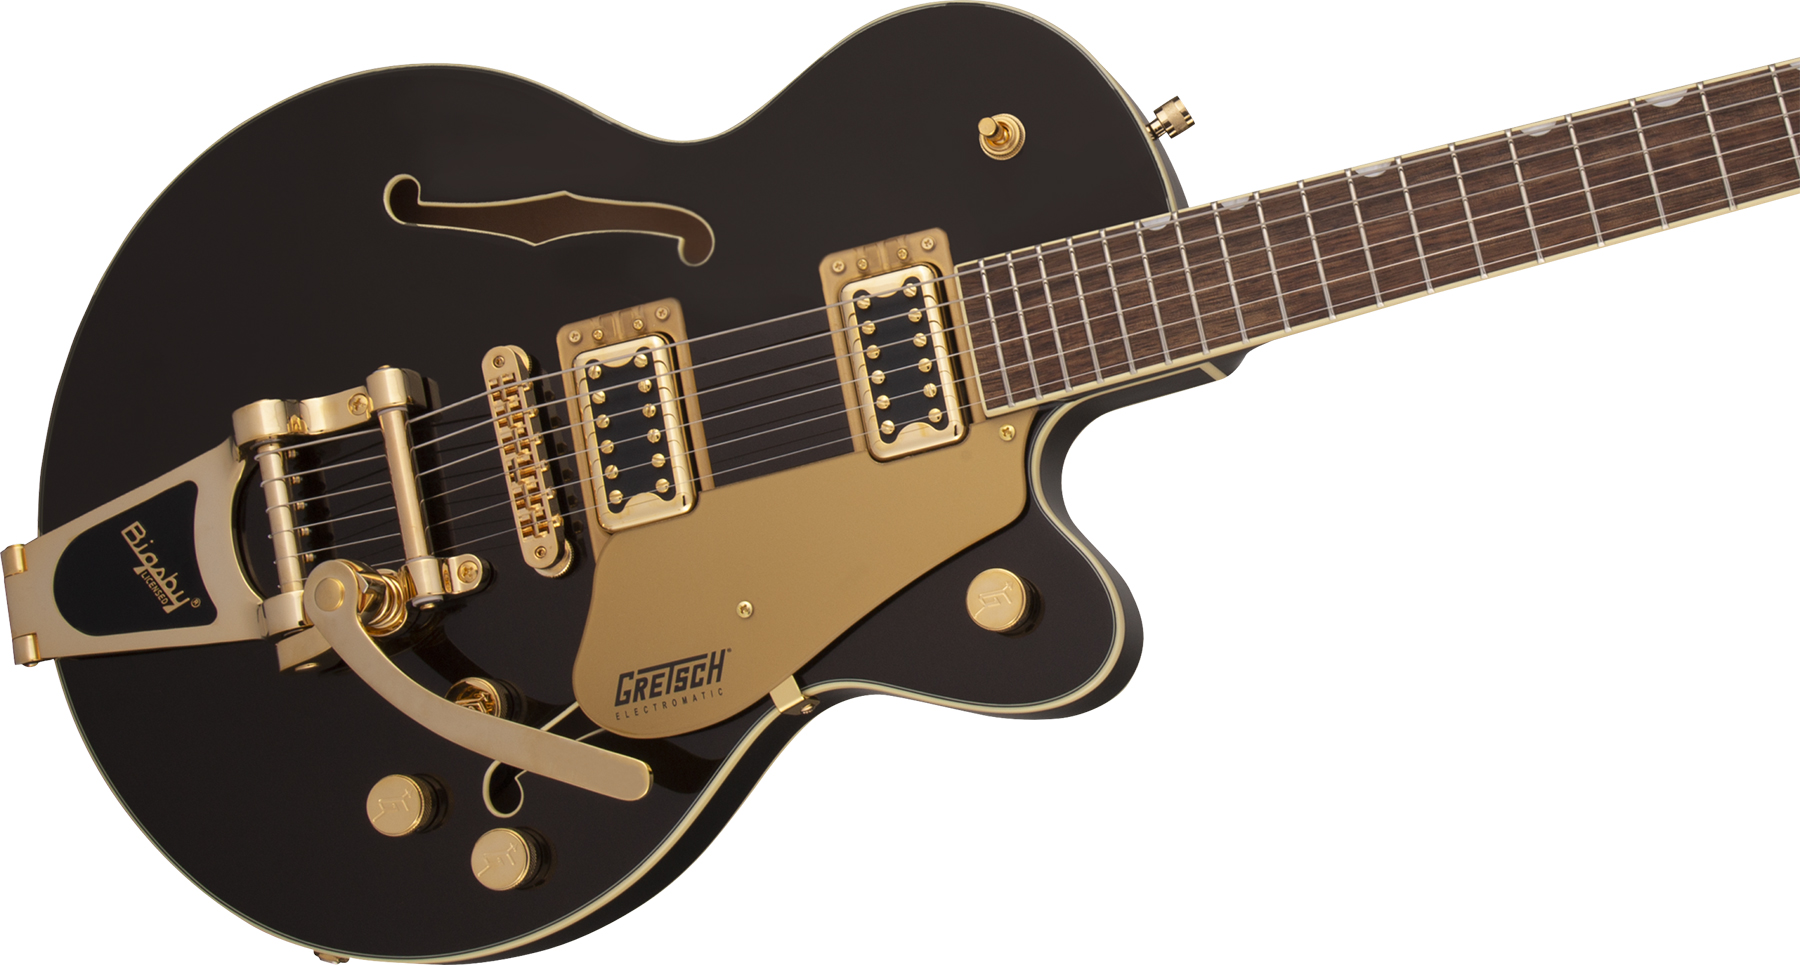 Gretsch G5655tg Electromatic Center Block Jr. Bigsby 2h Trem Lau - Black Gold - Semi-Hollow E-Gitarre - Variation 2